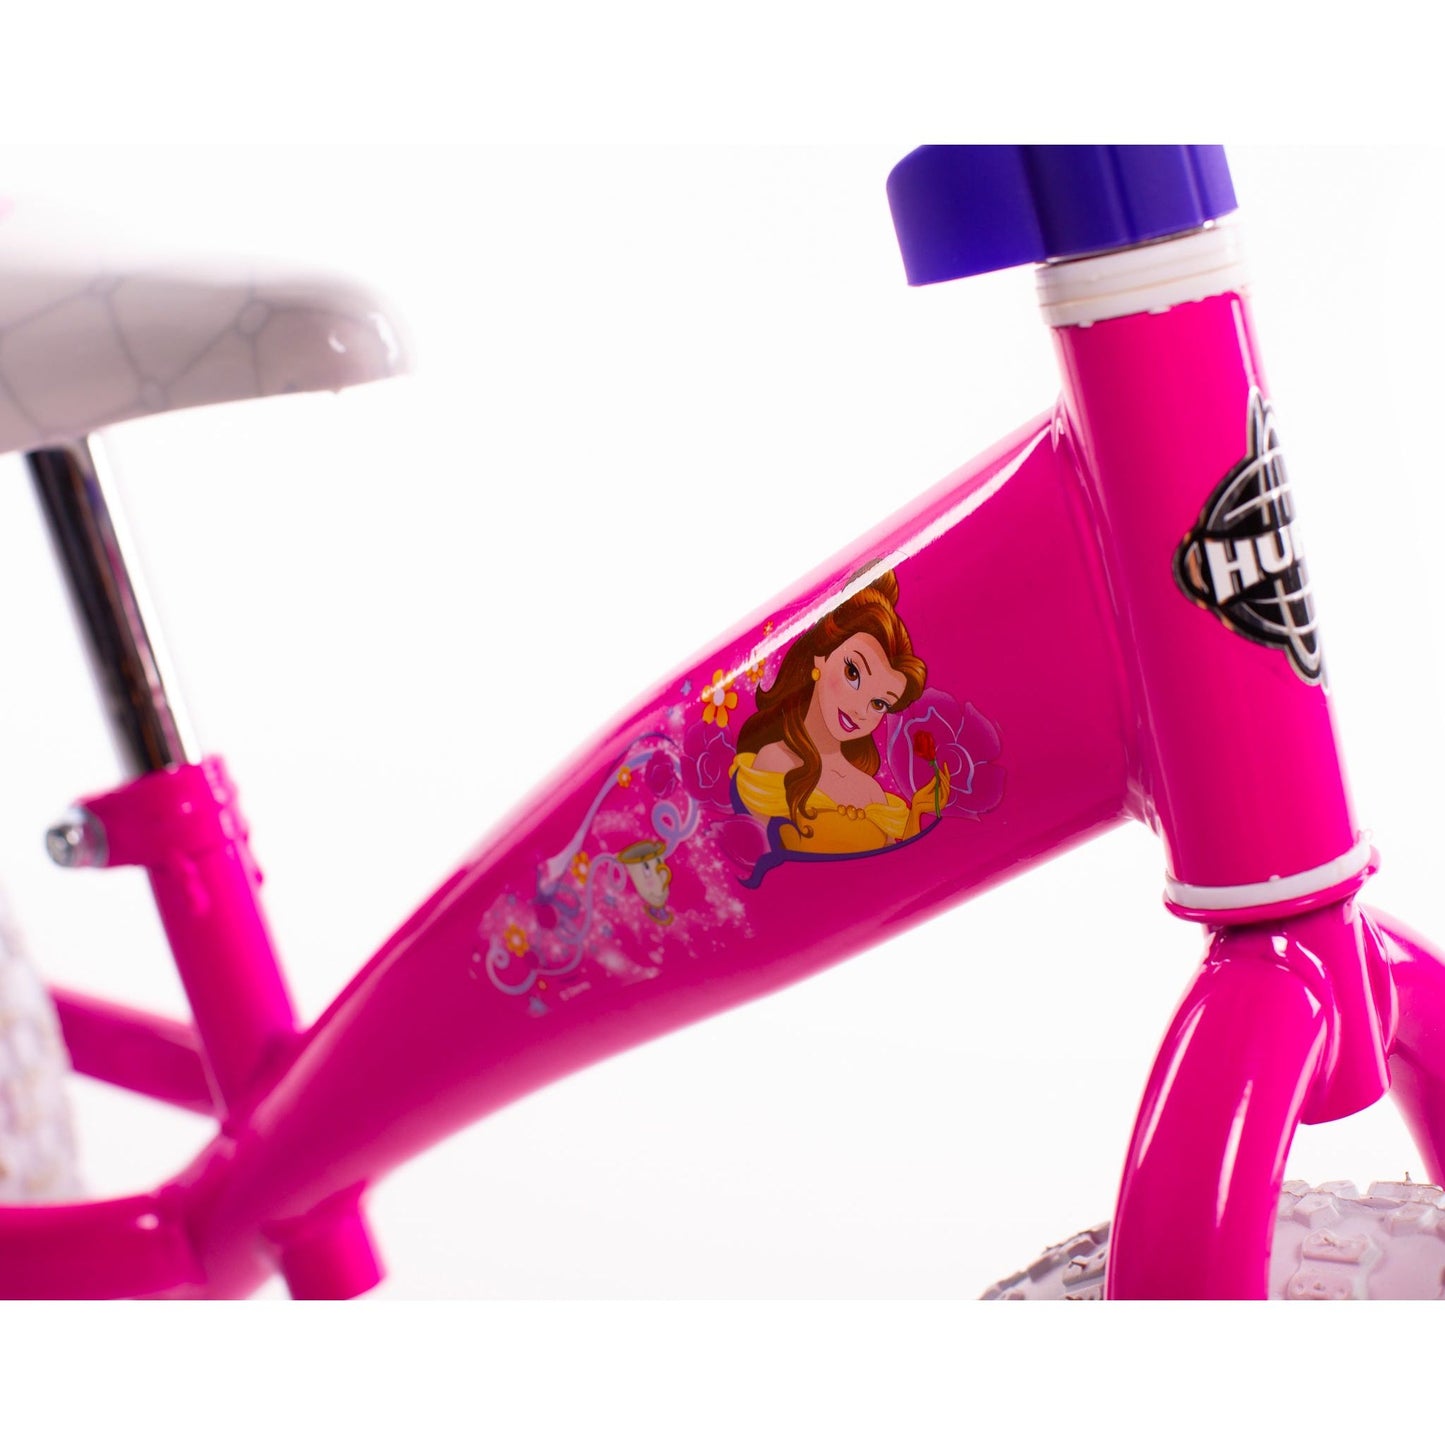 Huffy Disney Princess Kids 12" Balance Bike